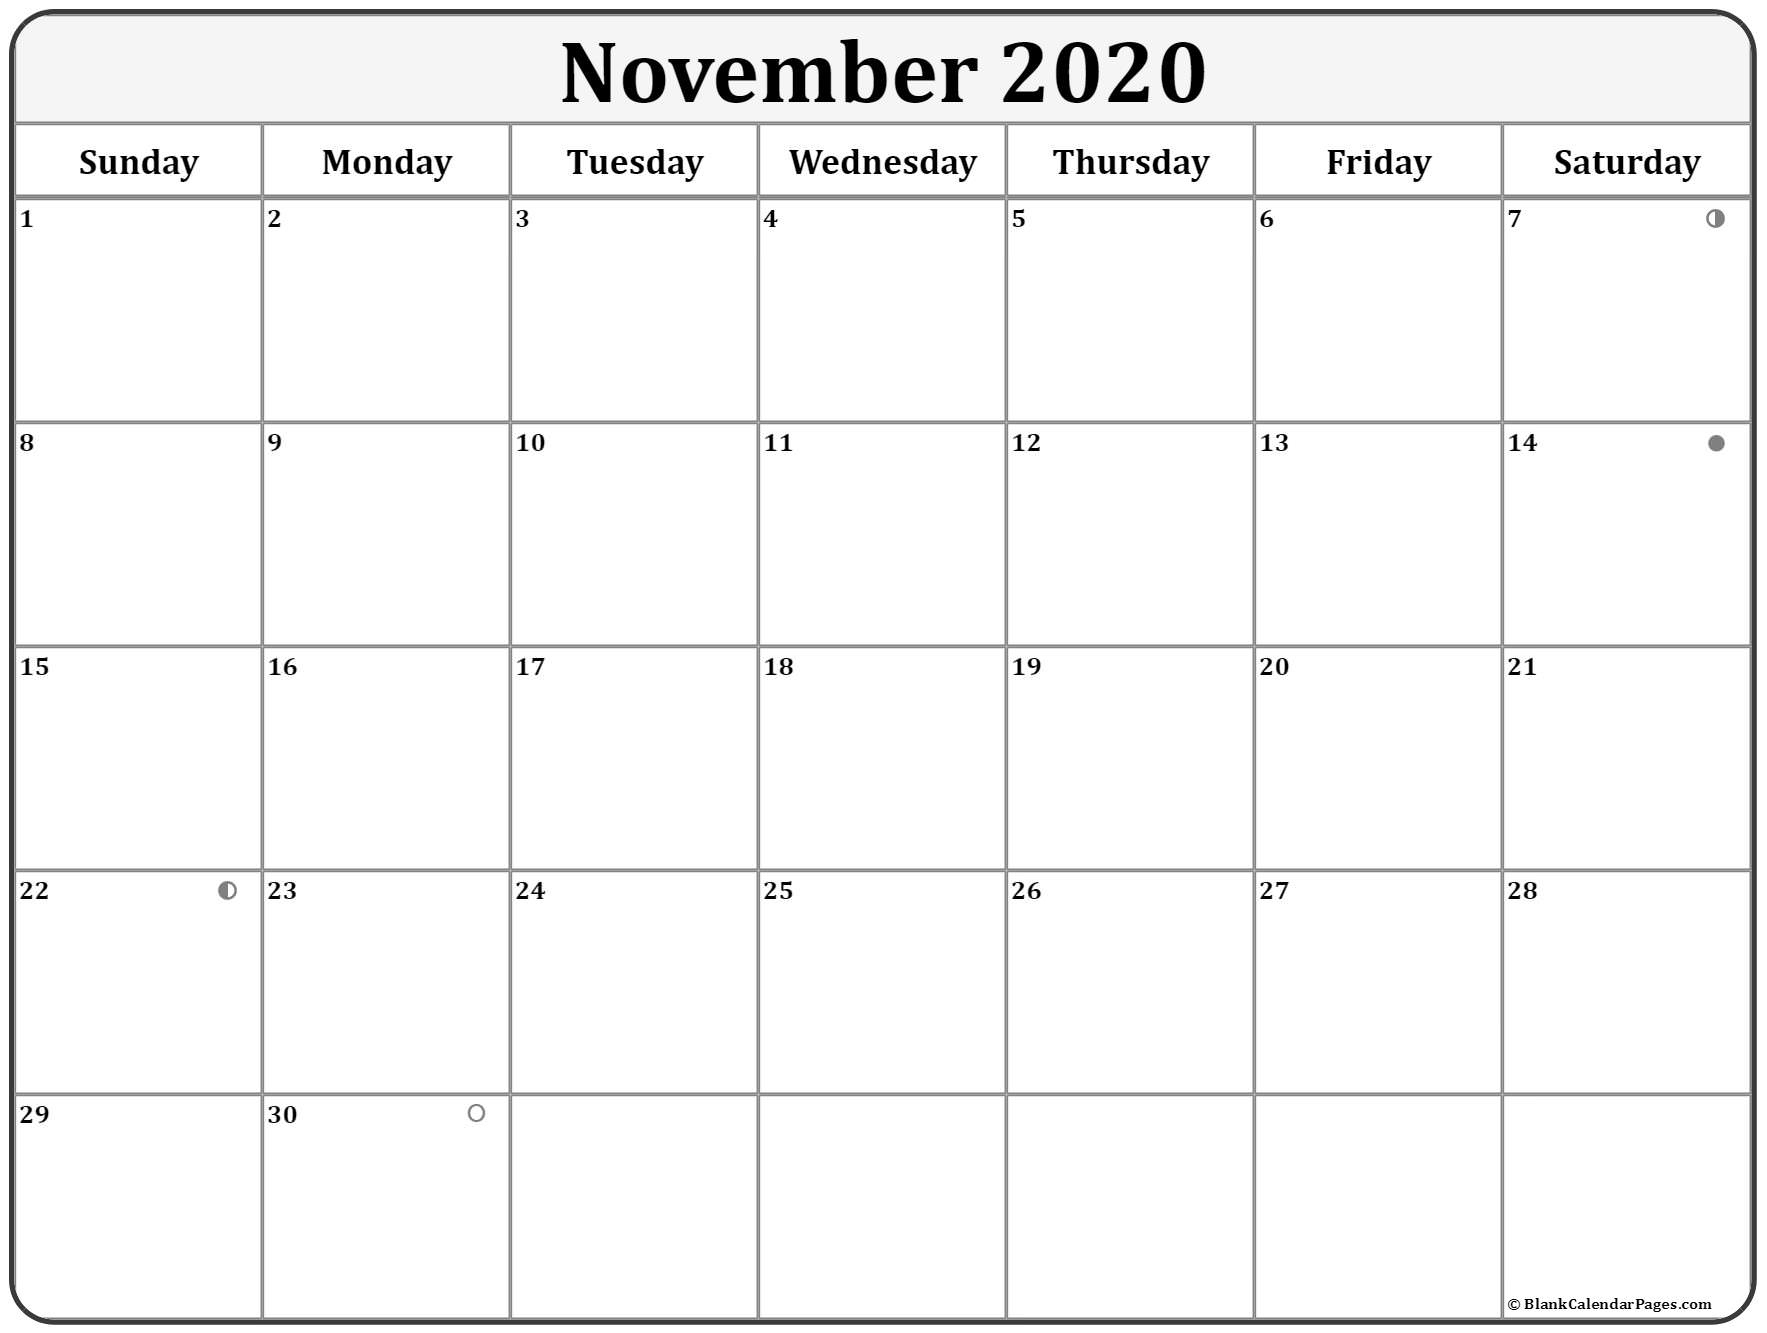 November 2020 Lunar Calendar | Moon Phase Calendar 2020 Calendar With Lunar Dates